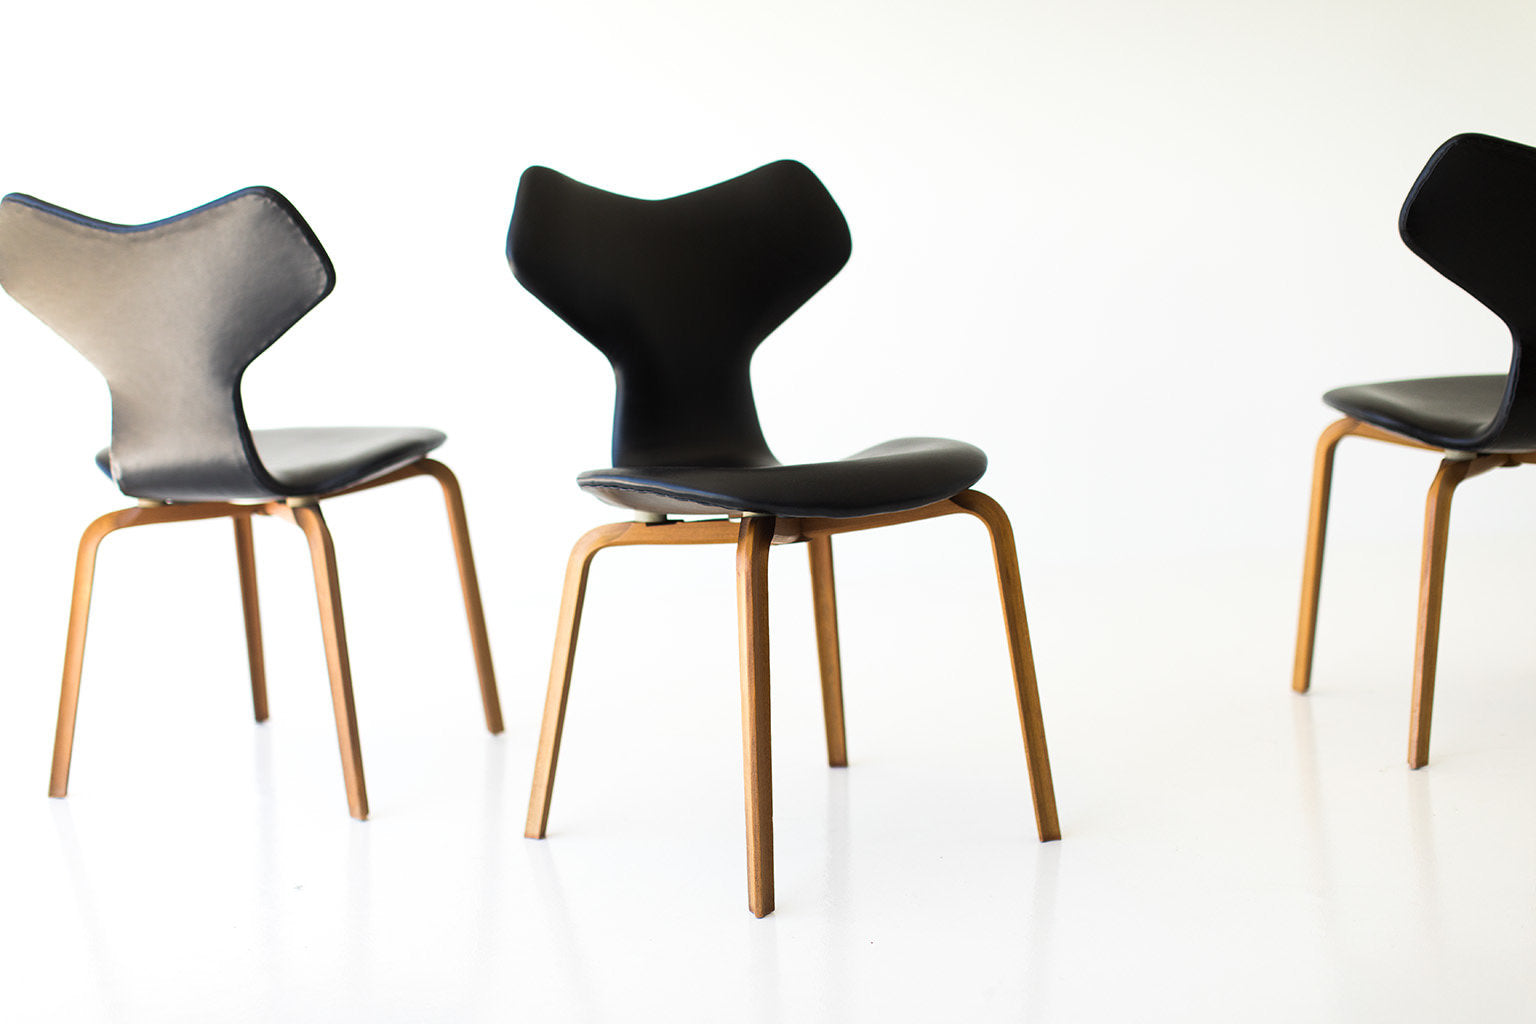 Arne-Jacobsen-Leather-Grand-prix-Dining-Chairs-Fritz-Hansen-004